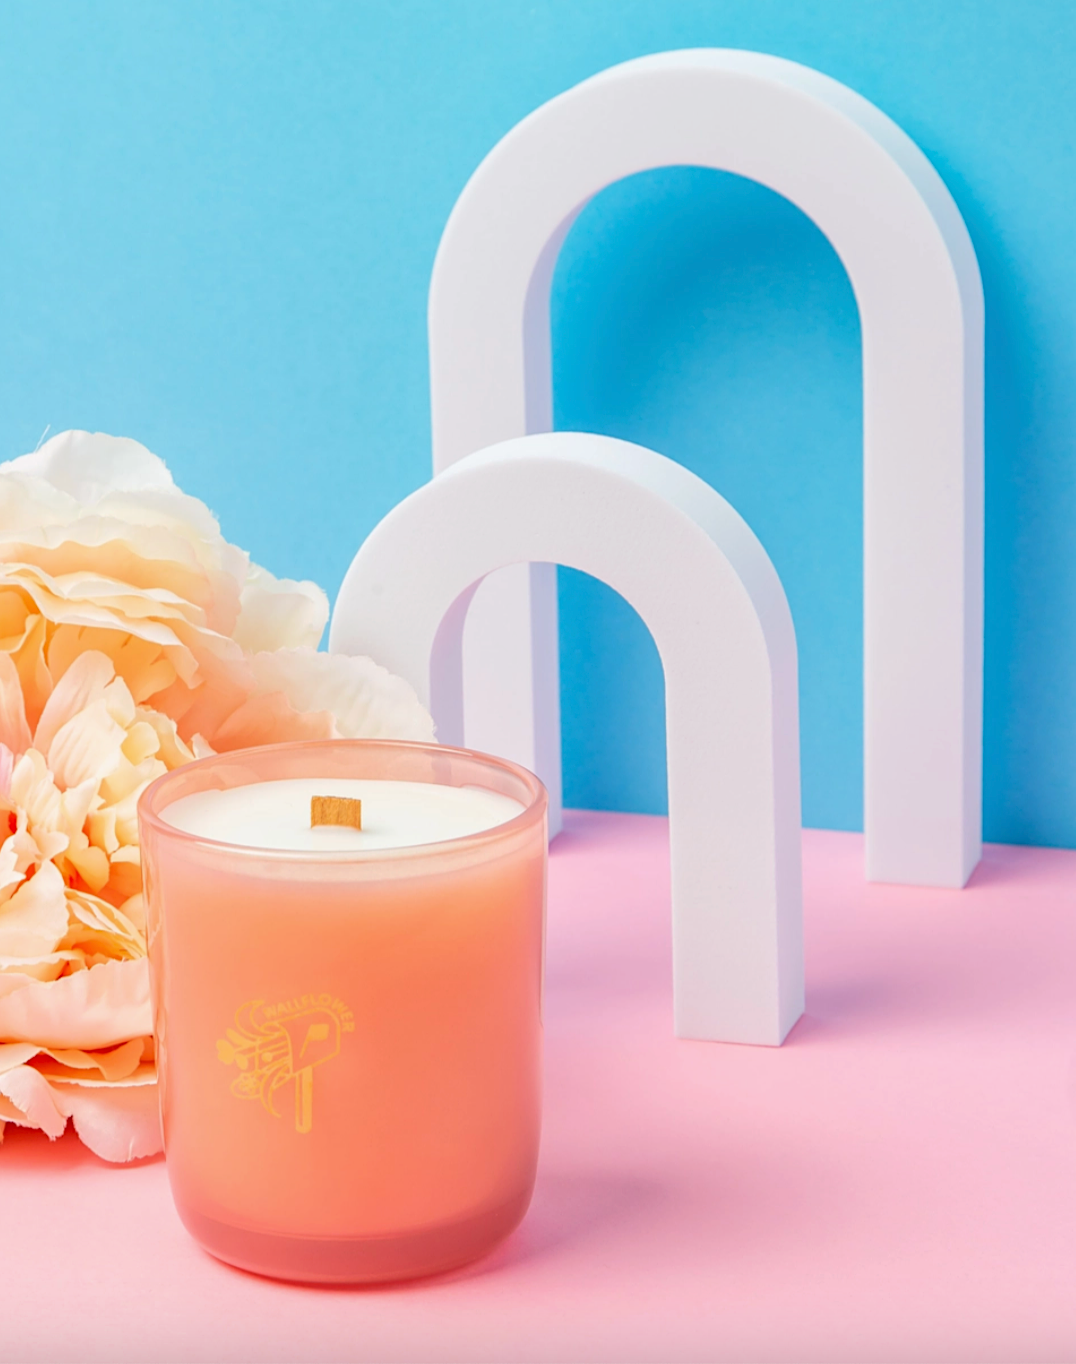 milk jar candle - wallflower